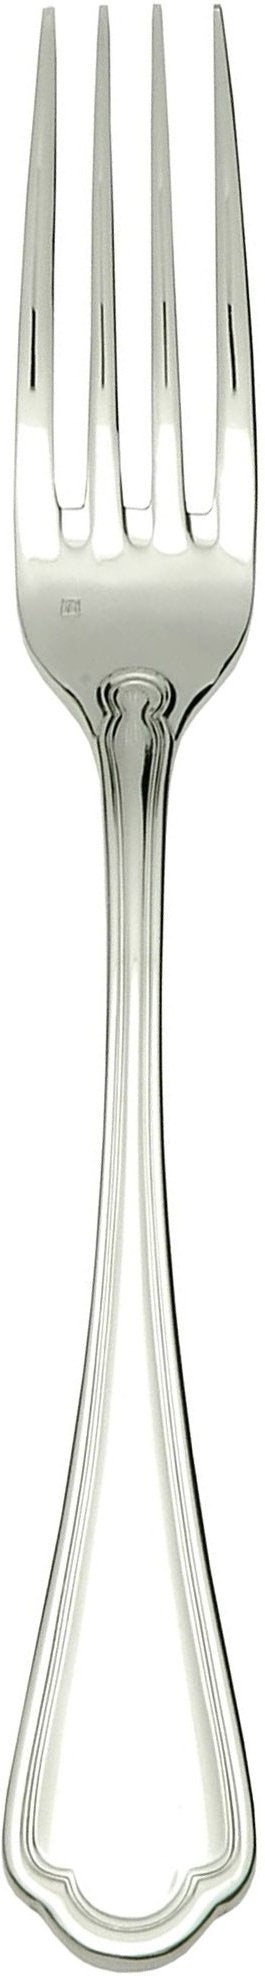 Fortessa - 8.1" Medici Stainless Steel Table Forks Set of 12 - 1.5.110.00.002